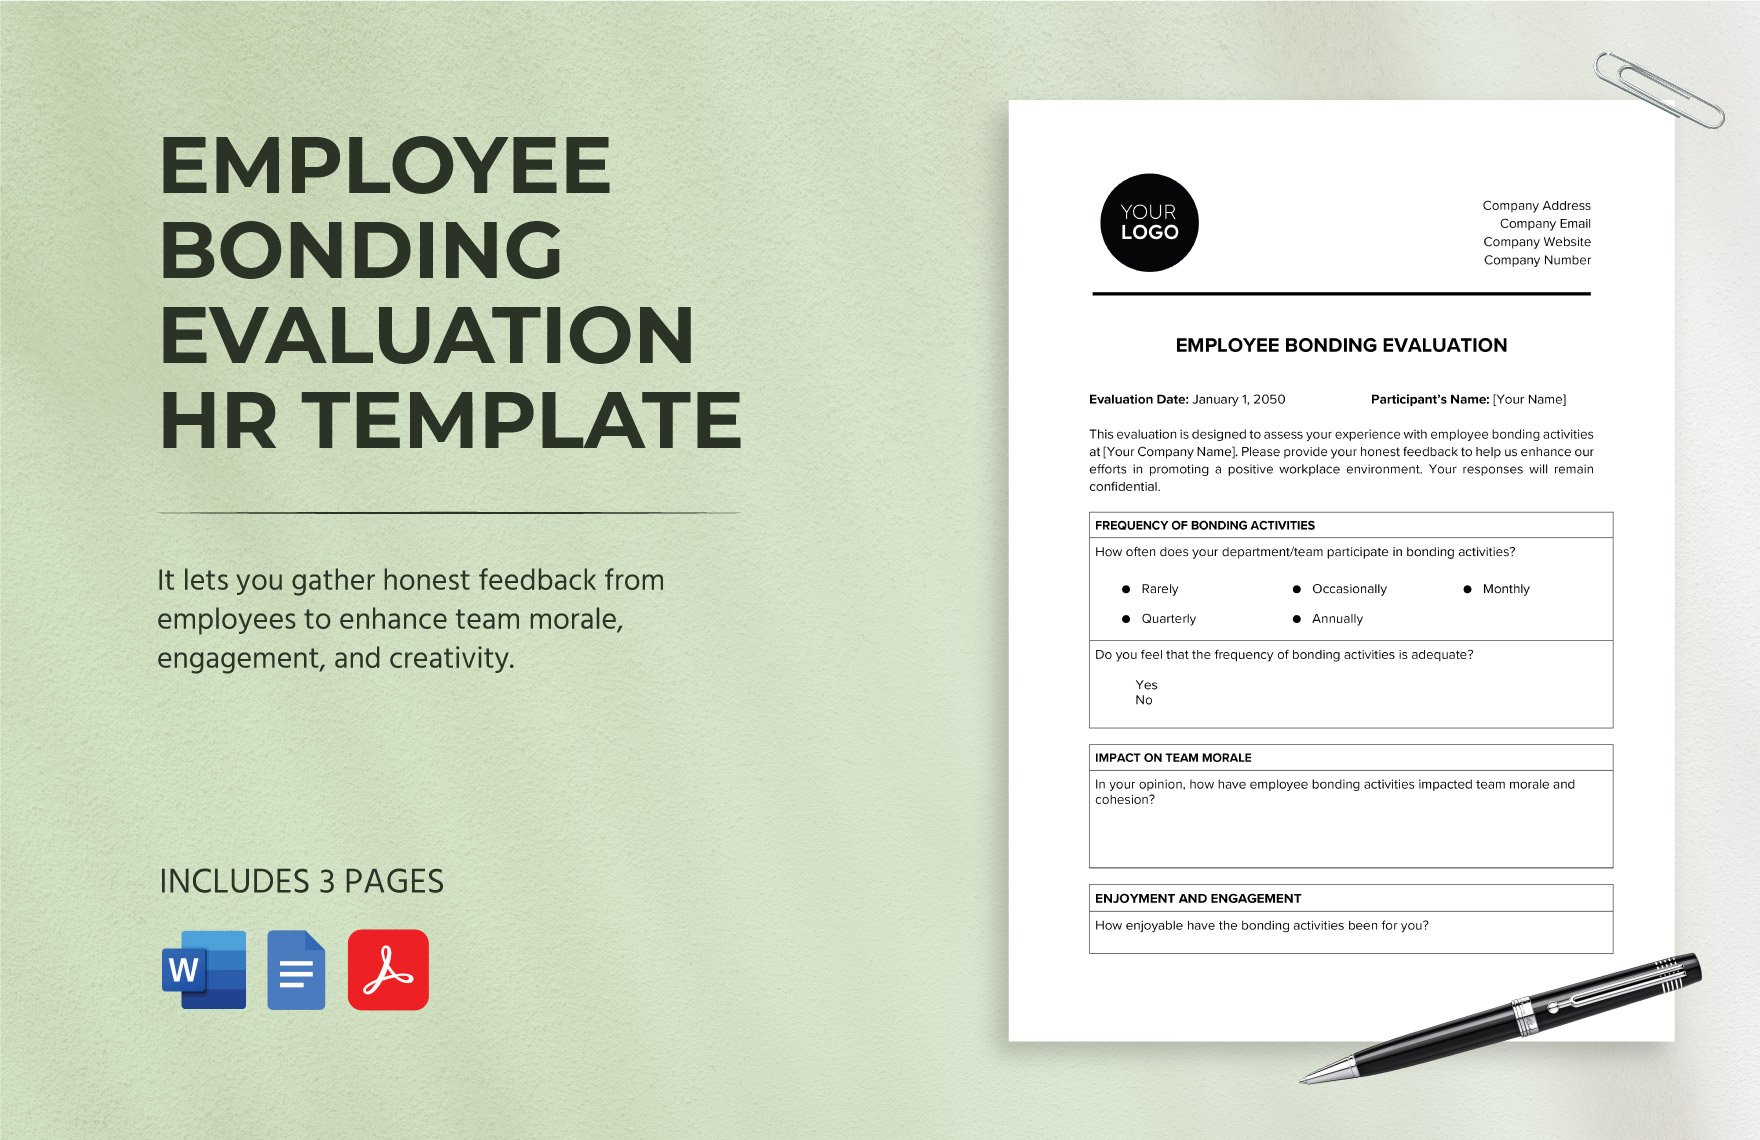 Employee Bonding Evaluation HR Template in Word, Google Docs, PDF